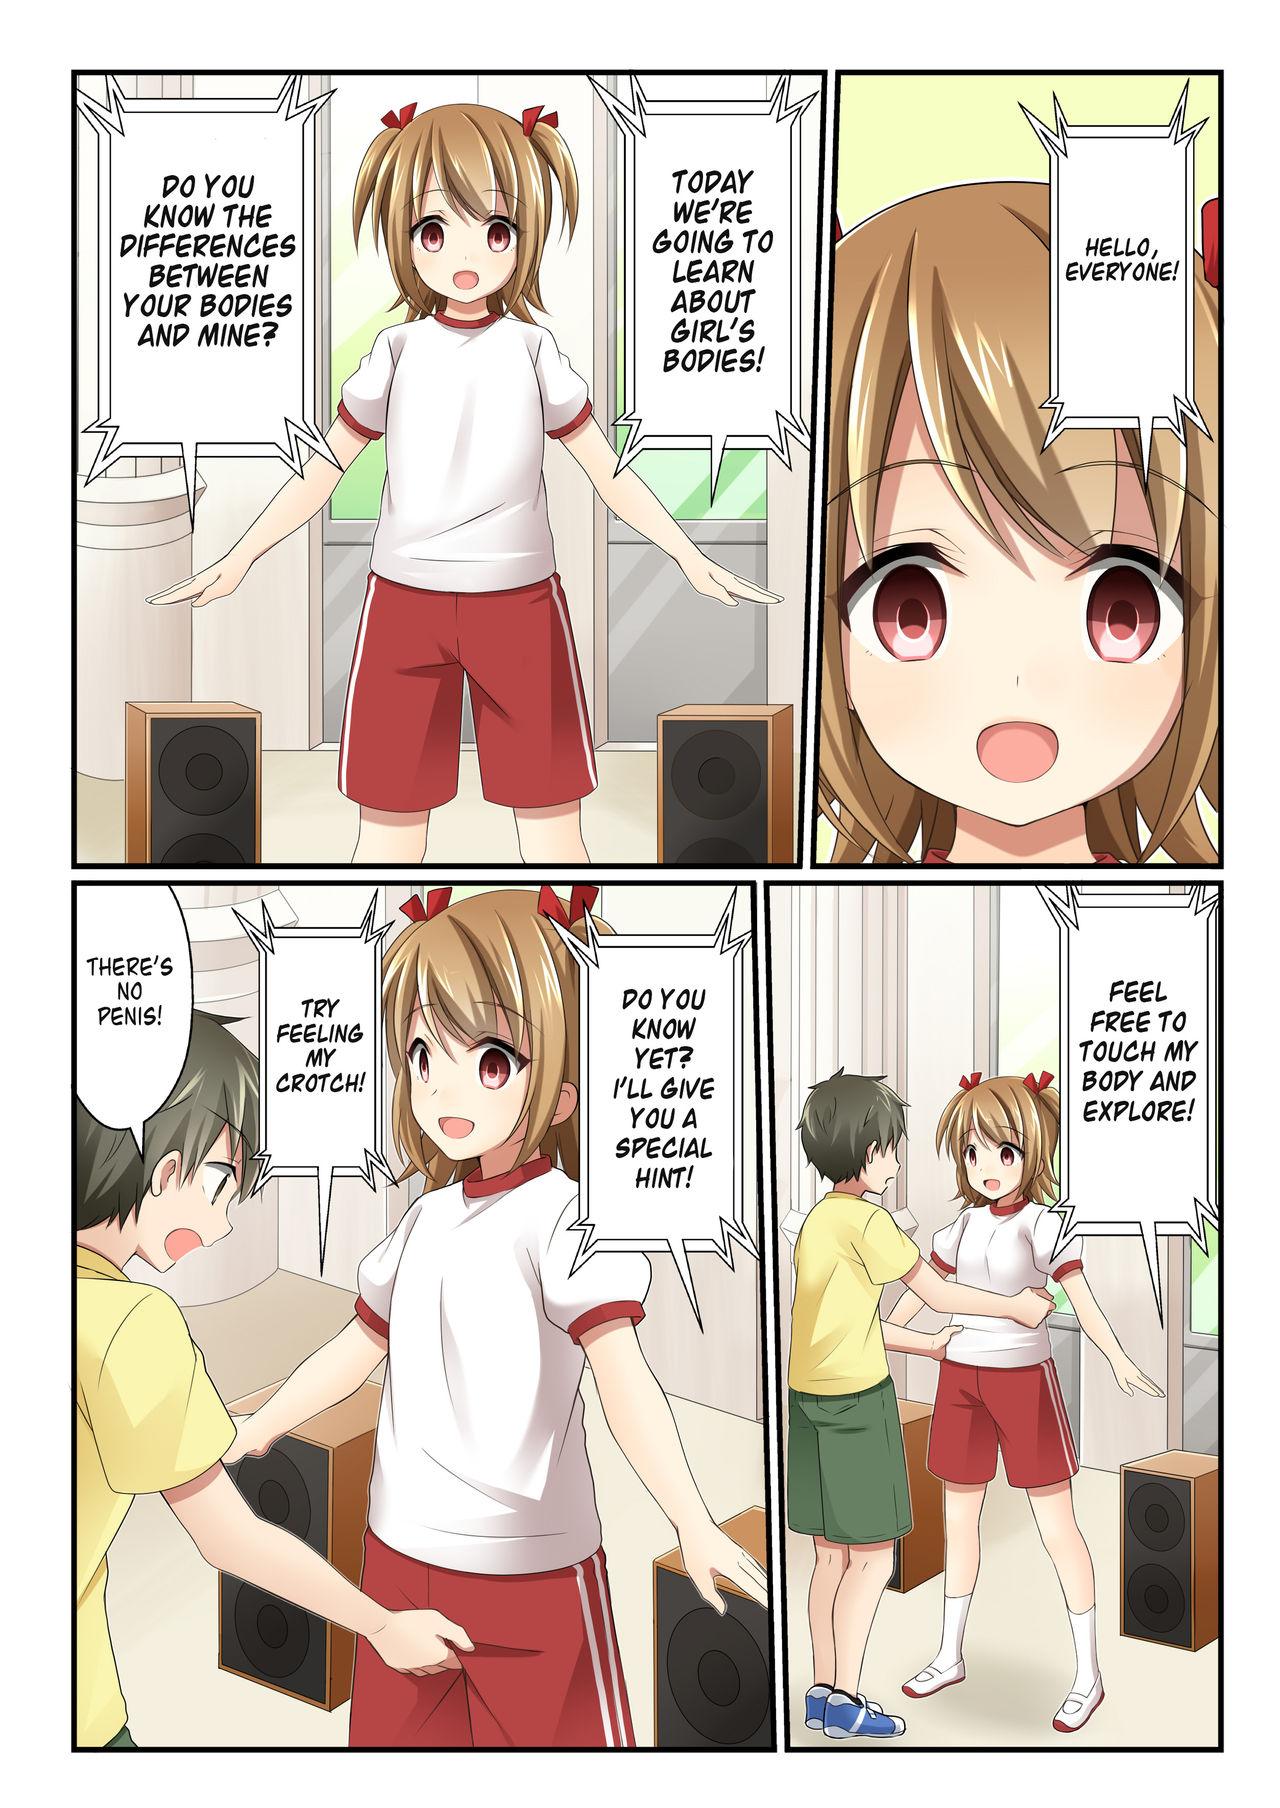 [Shinenkan] Joutaihenka Manga vol. 2 ~Onnanoko no Asoko wa dou natterun no? Hen~ | Transformation Comics vol. 2 ~What's the Deal with Girl's Privates?~ [English] 1